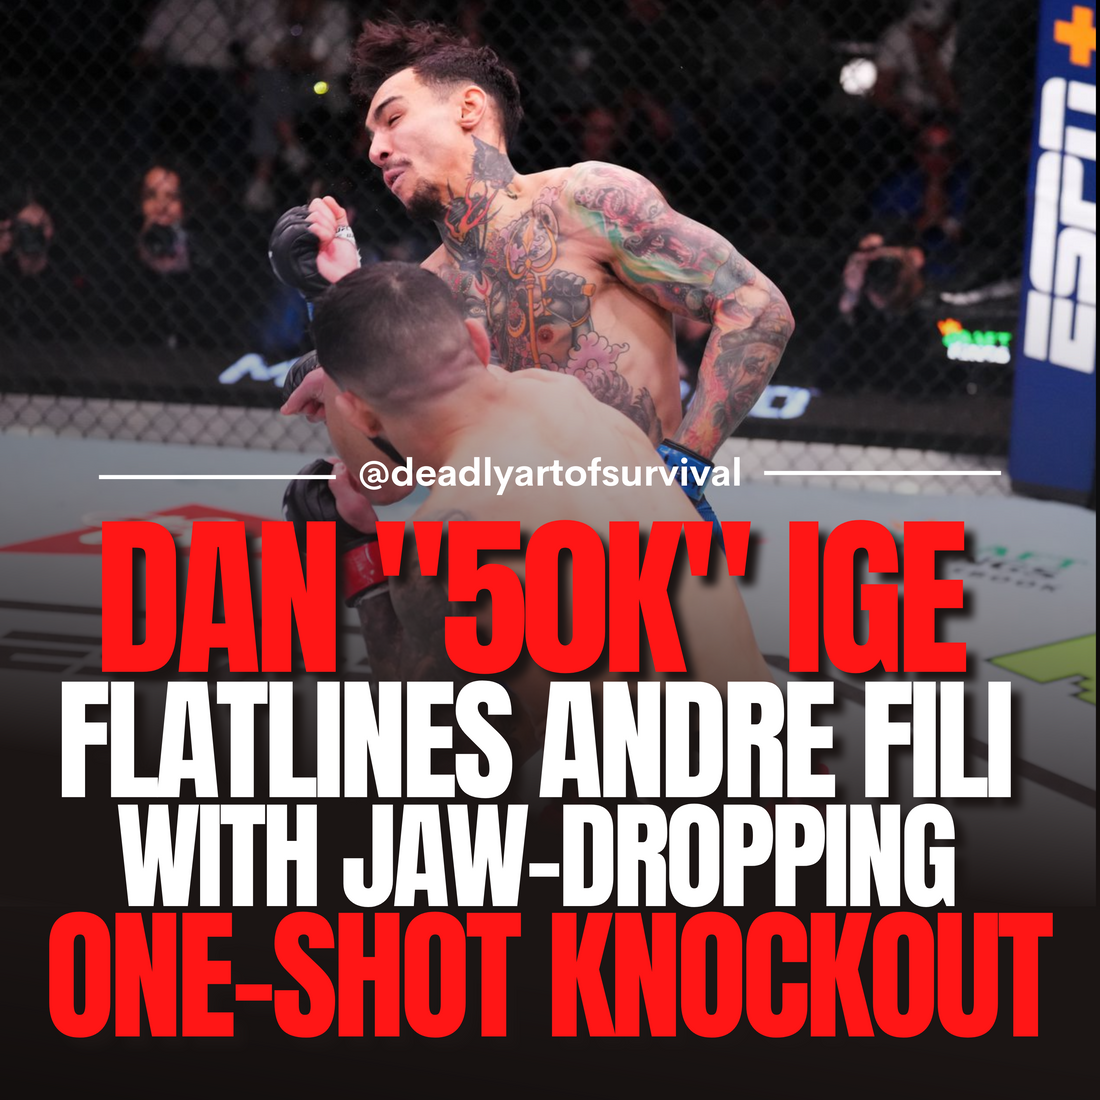 Dan-Ige-Flatlines-Andre-Fili-with-Stunning-One-Shot-Knockout deadlyartofsurvival.com